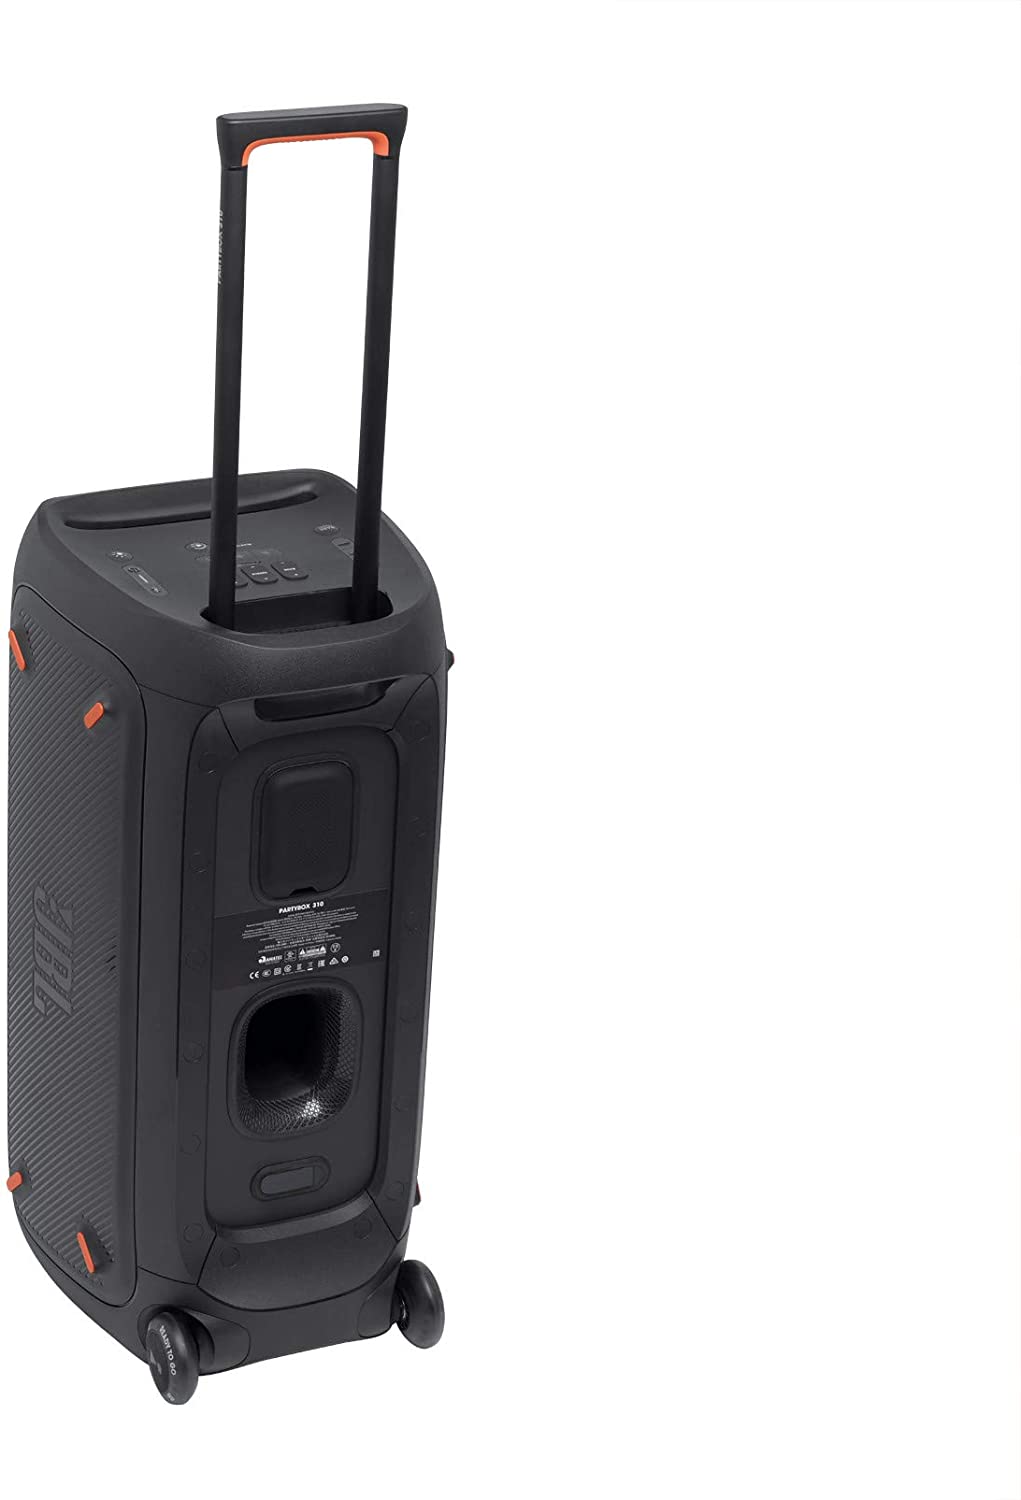 JBL Party Box 310 Bluetooth Speakers